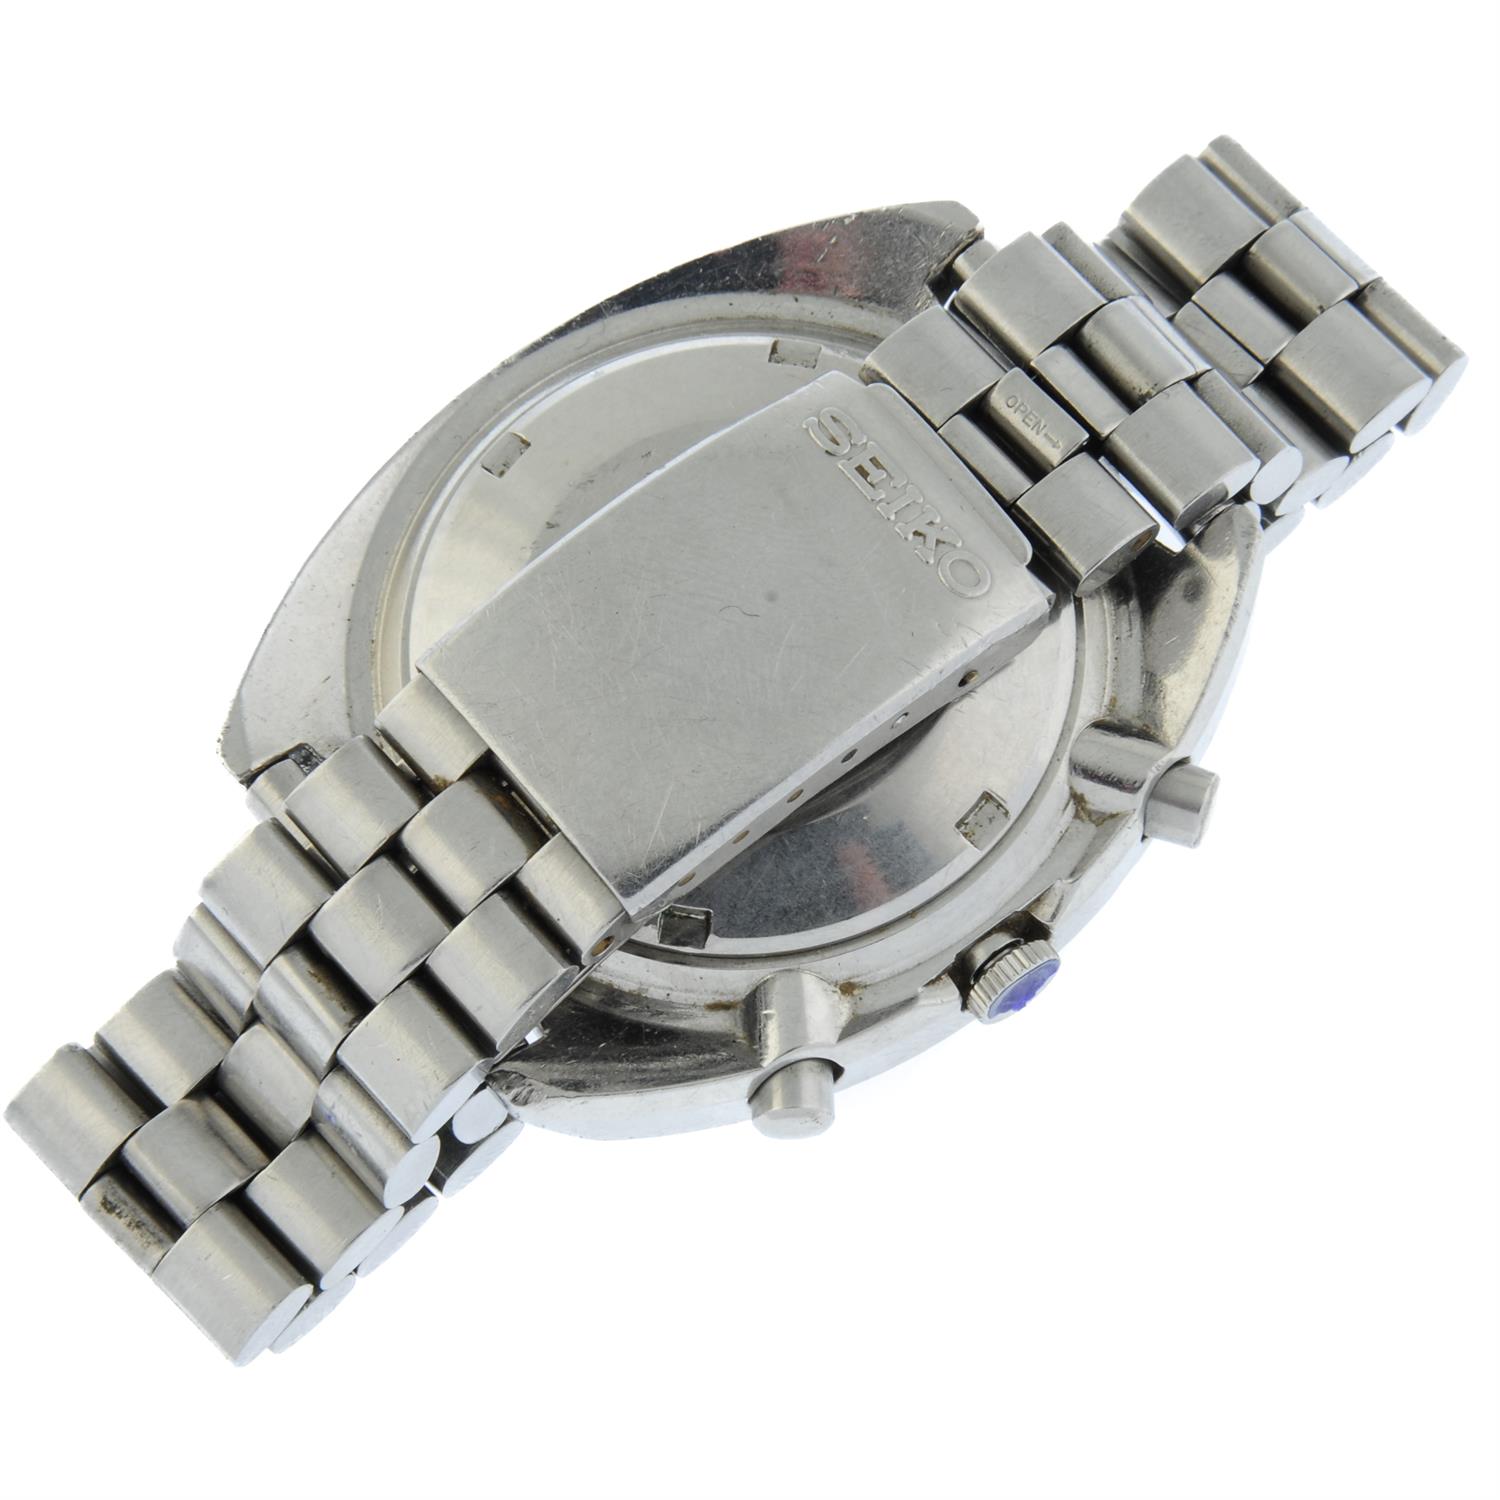 Seiko - a 'Pogue' chronograph watch, 41mm. - Image 2 of 4